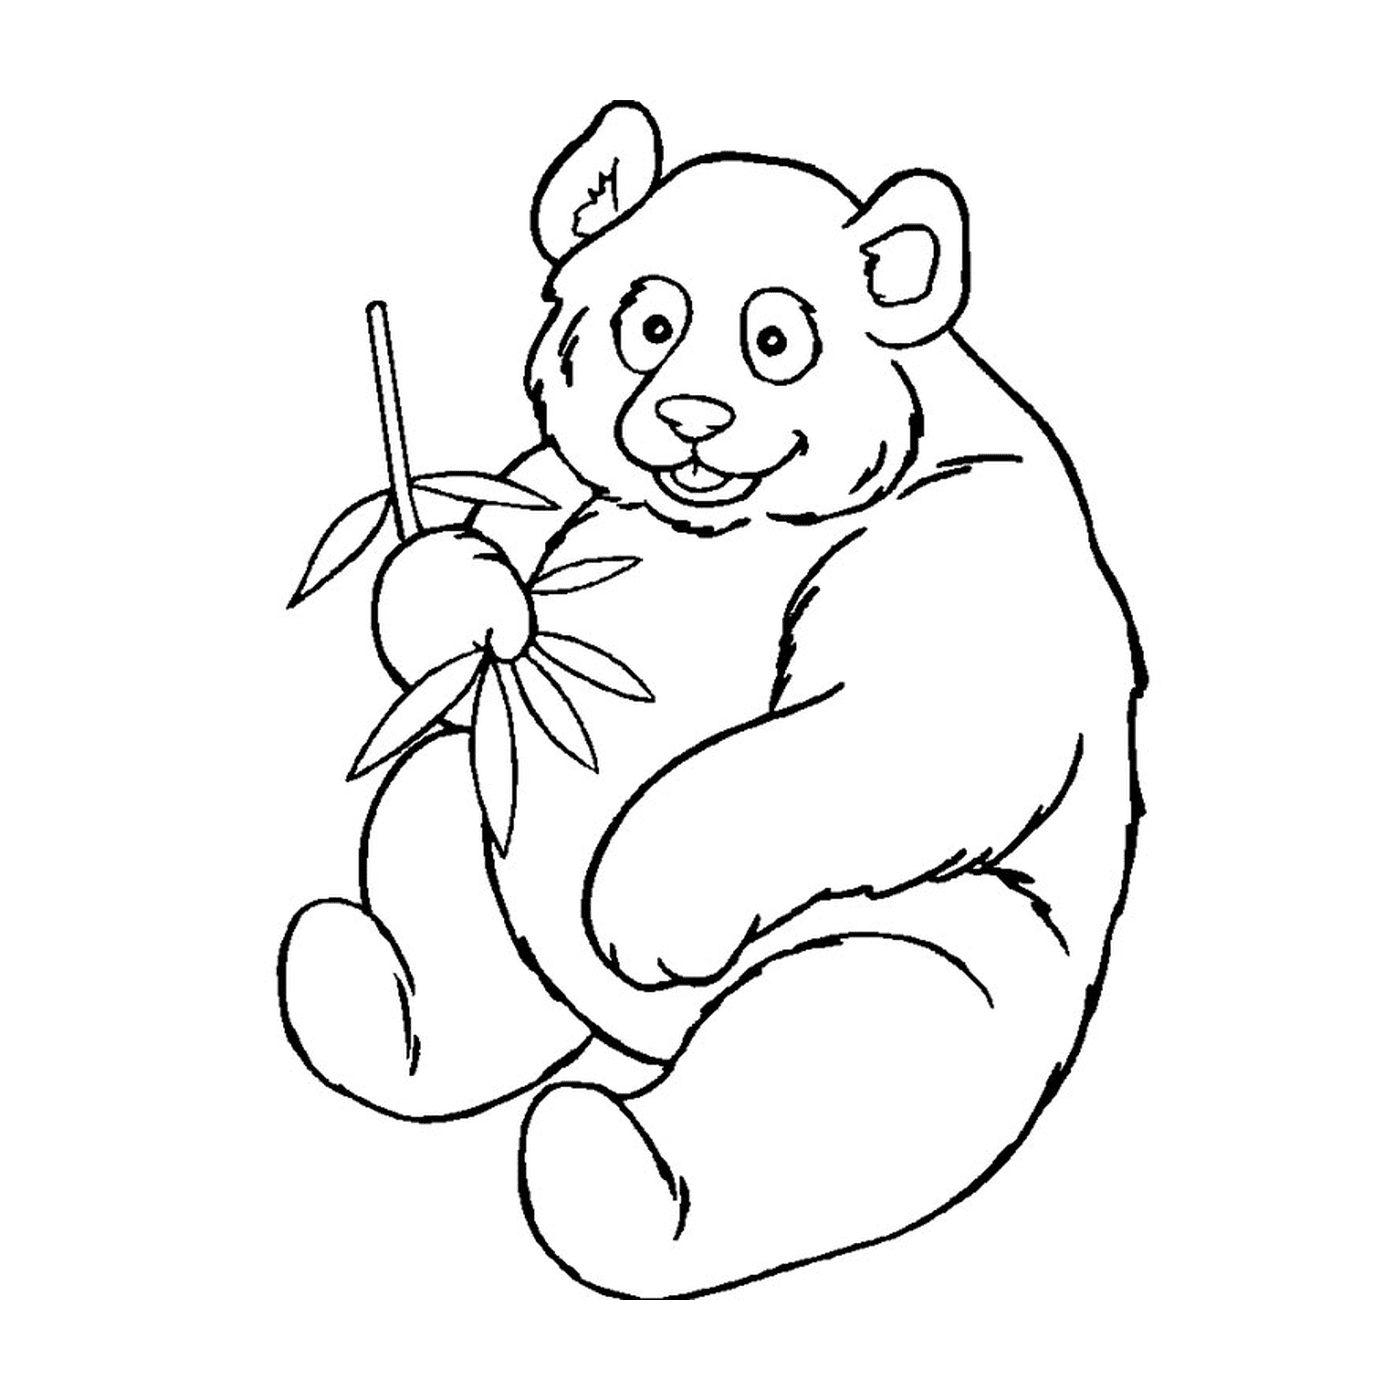  Bambù snacking giovane panda 